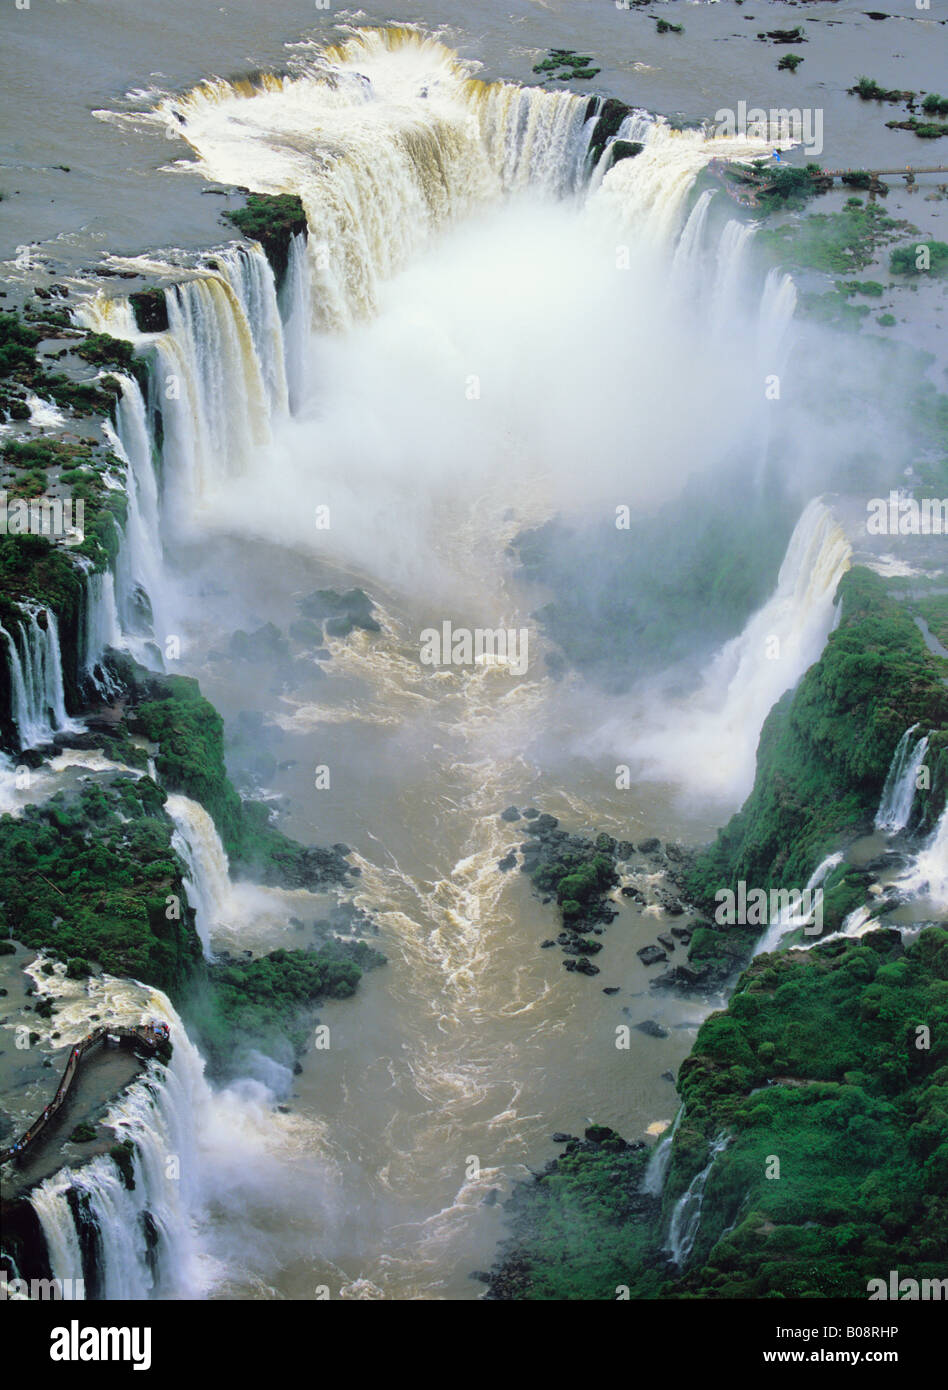 South America; Brazil, Argentina, Igwacu, Igwazu, Fiz, Falls. Igwacu Falls thunder into the Igwacu River below. Stock Photo